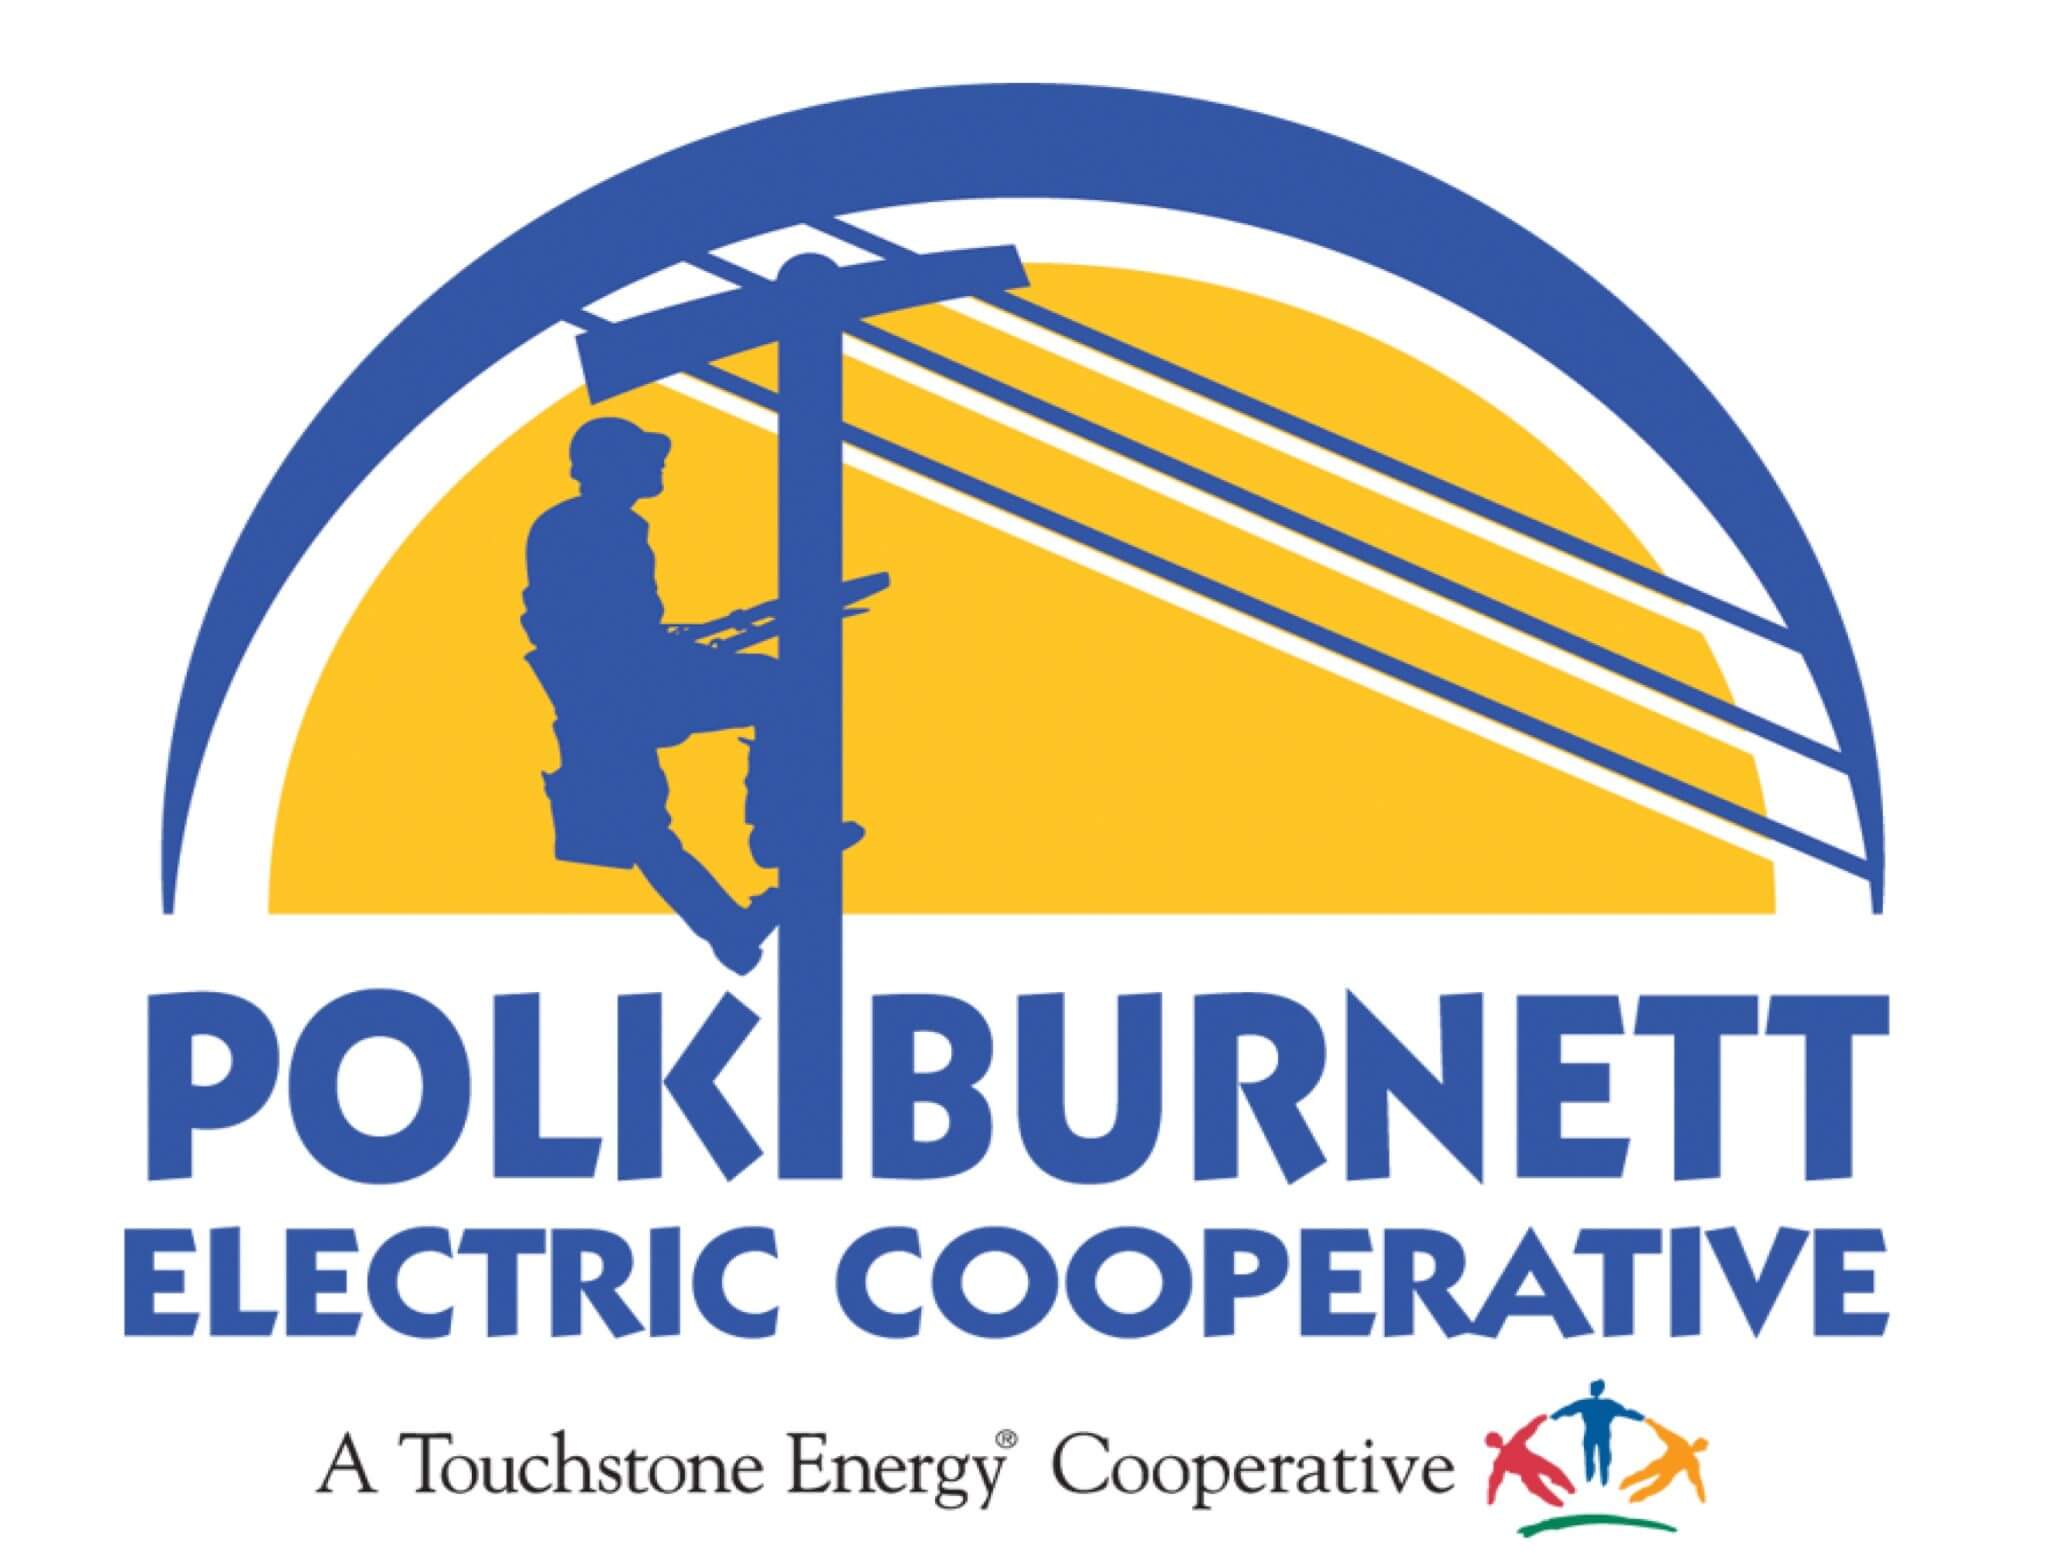 Polk Burnett Electric Cooperative